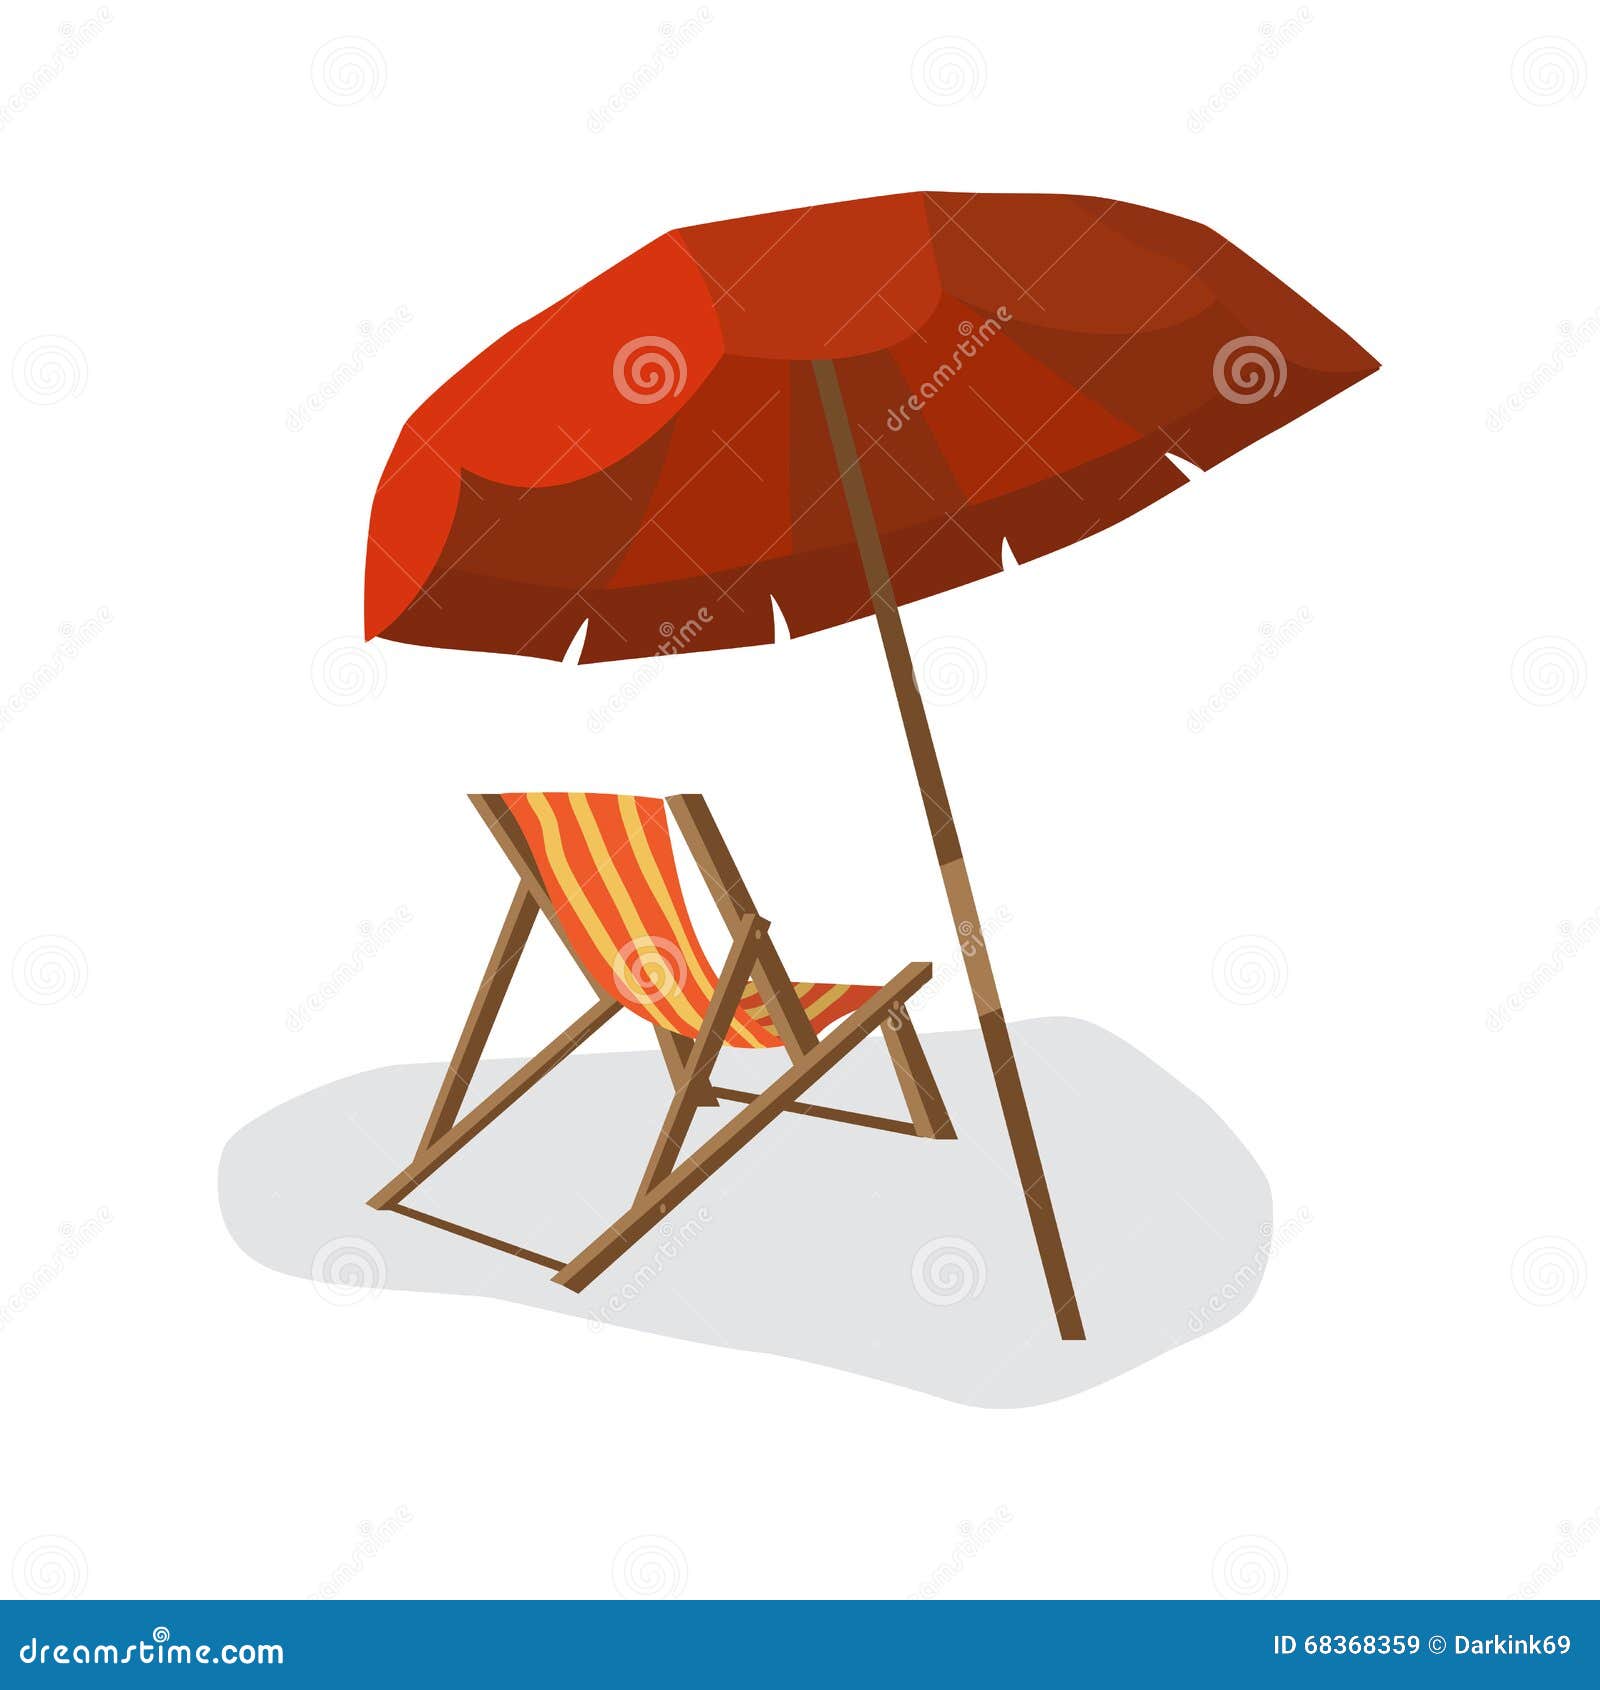 sea summer beach, sun umbrellas, beach beds  with shadow